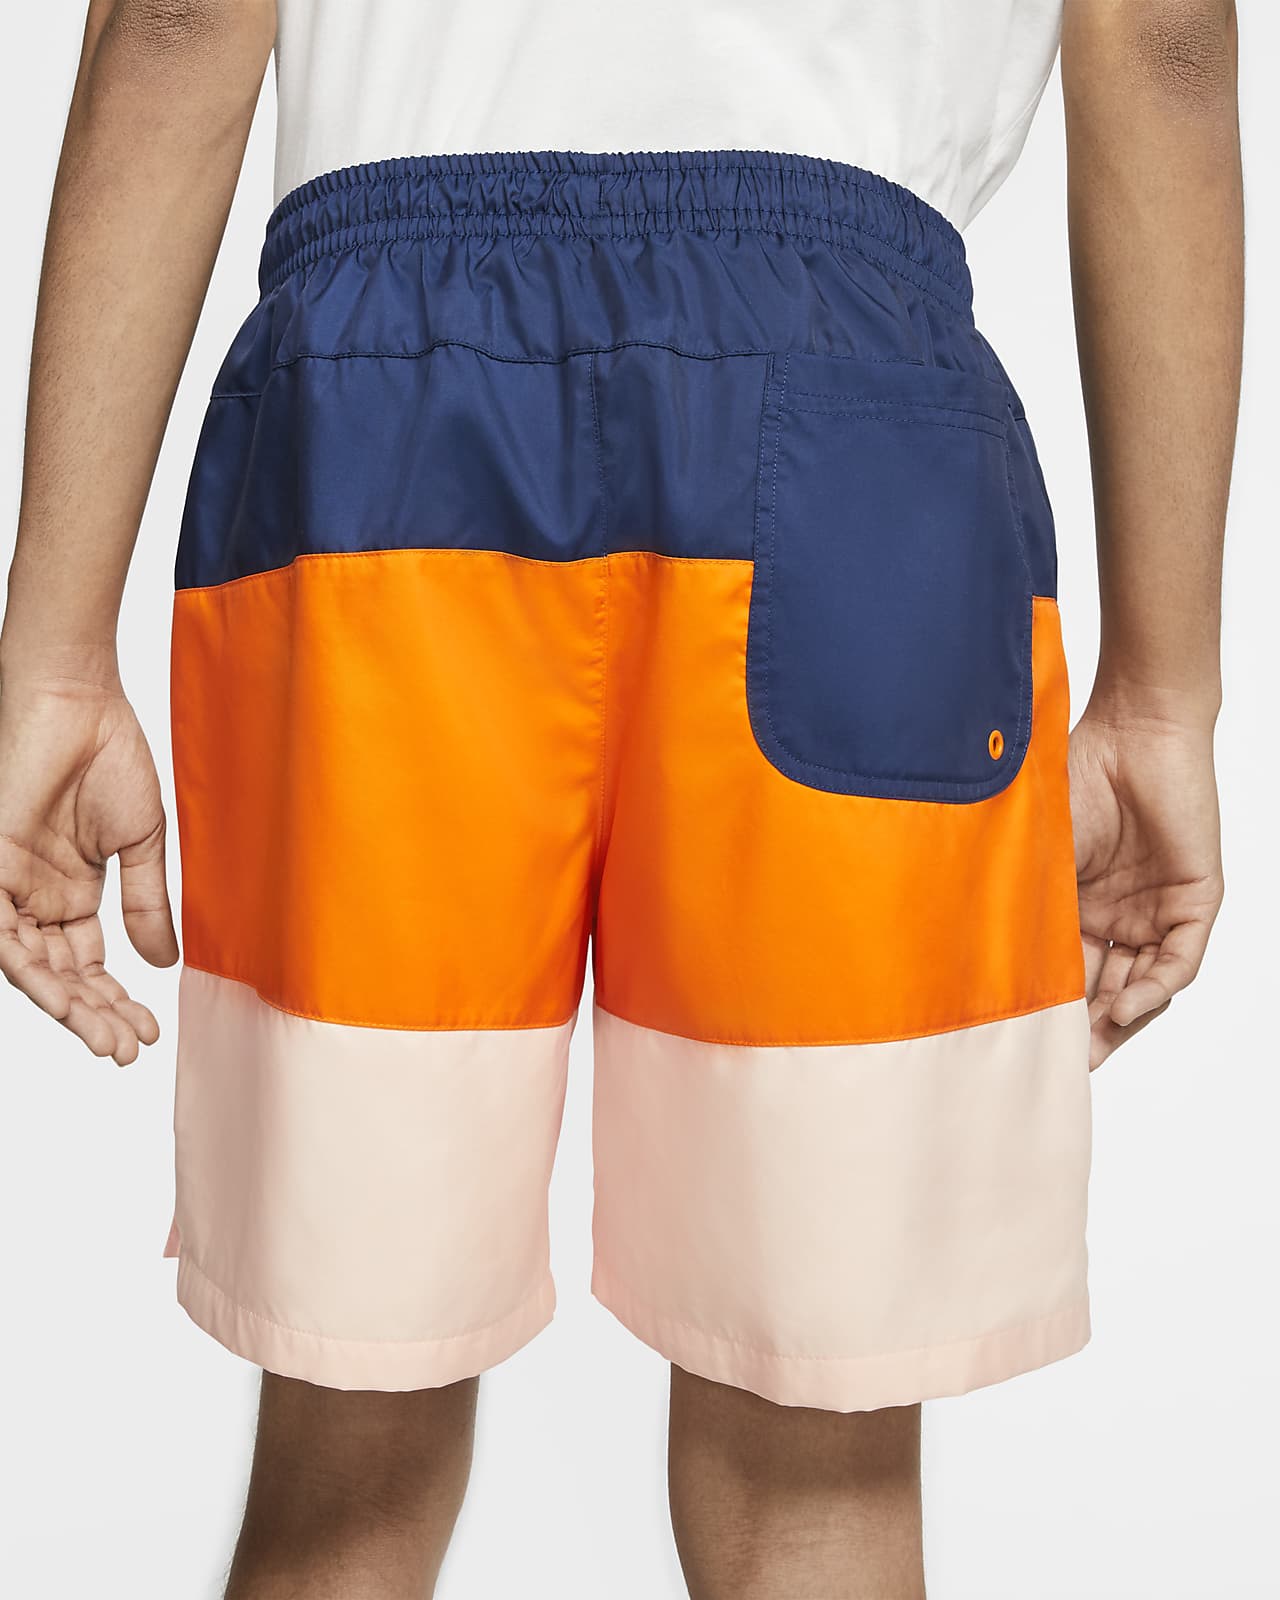 nike men's woven shorts orange